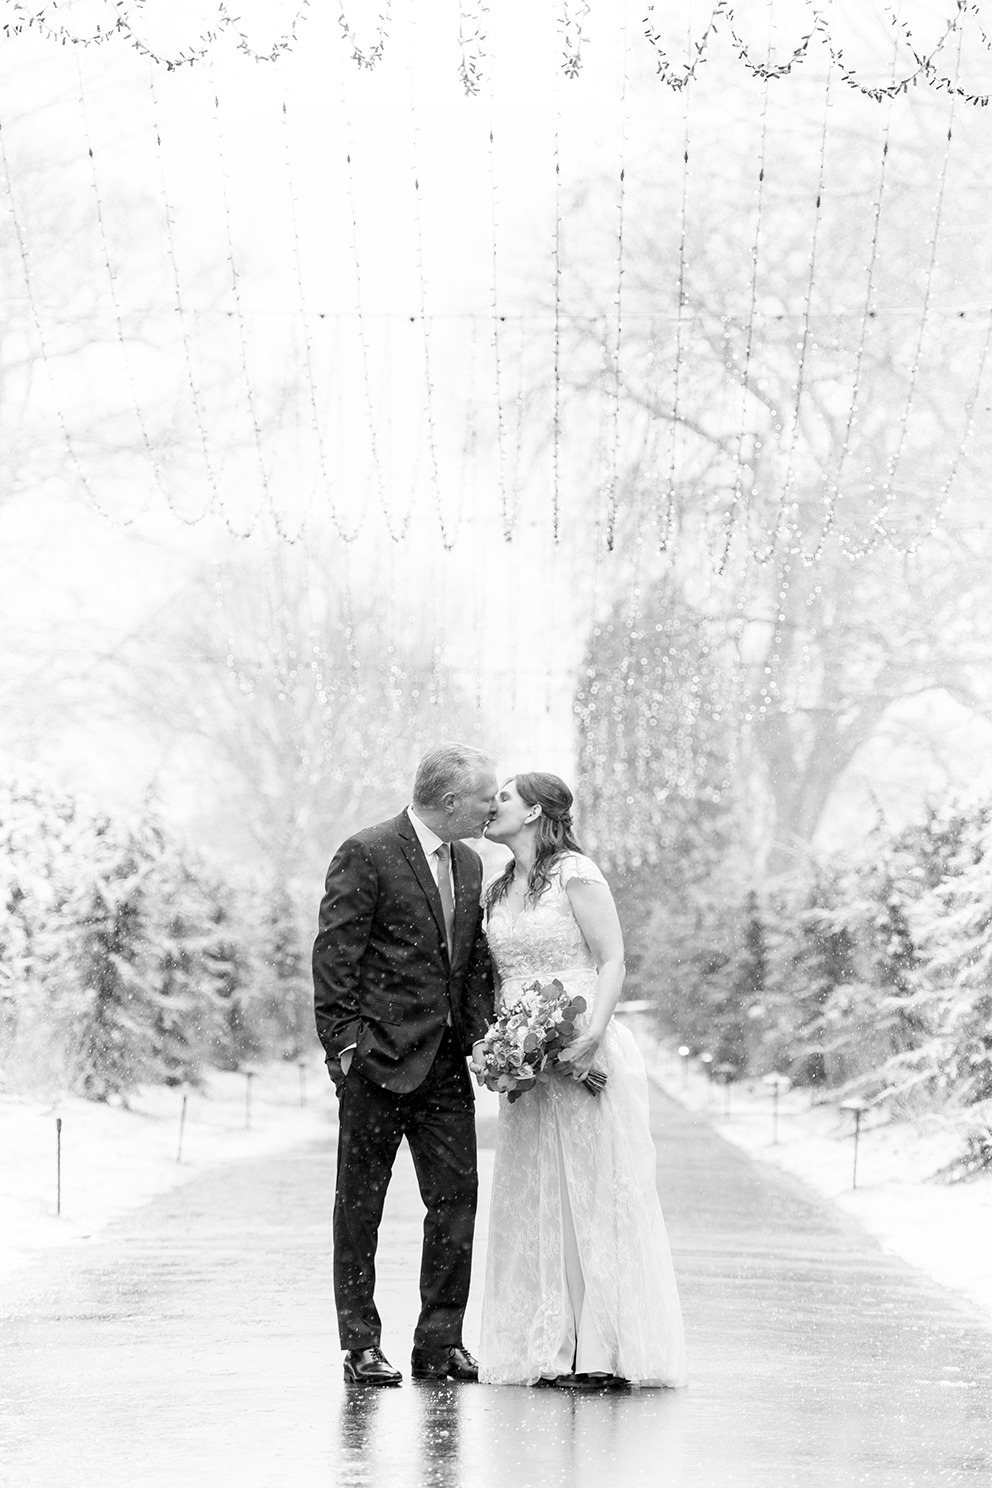 wedding photo in snow